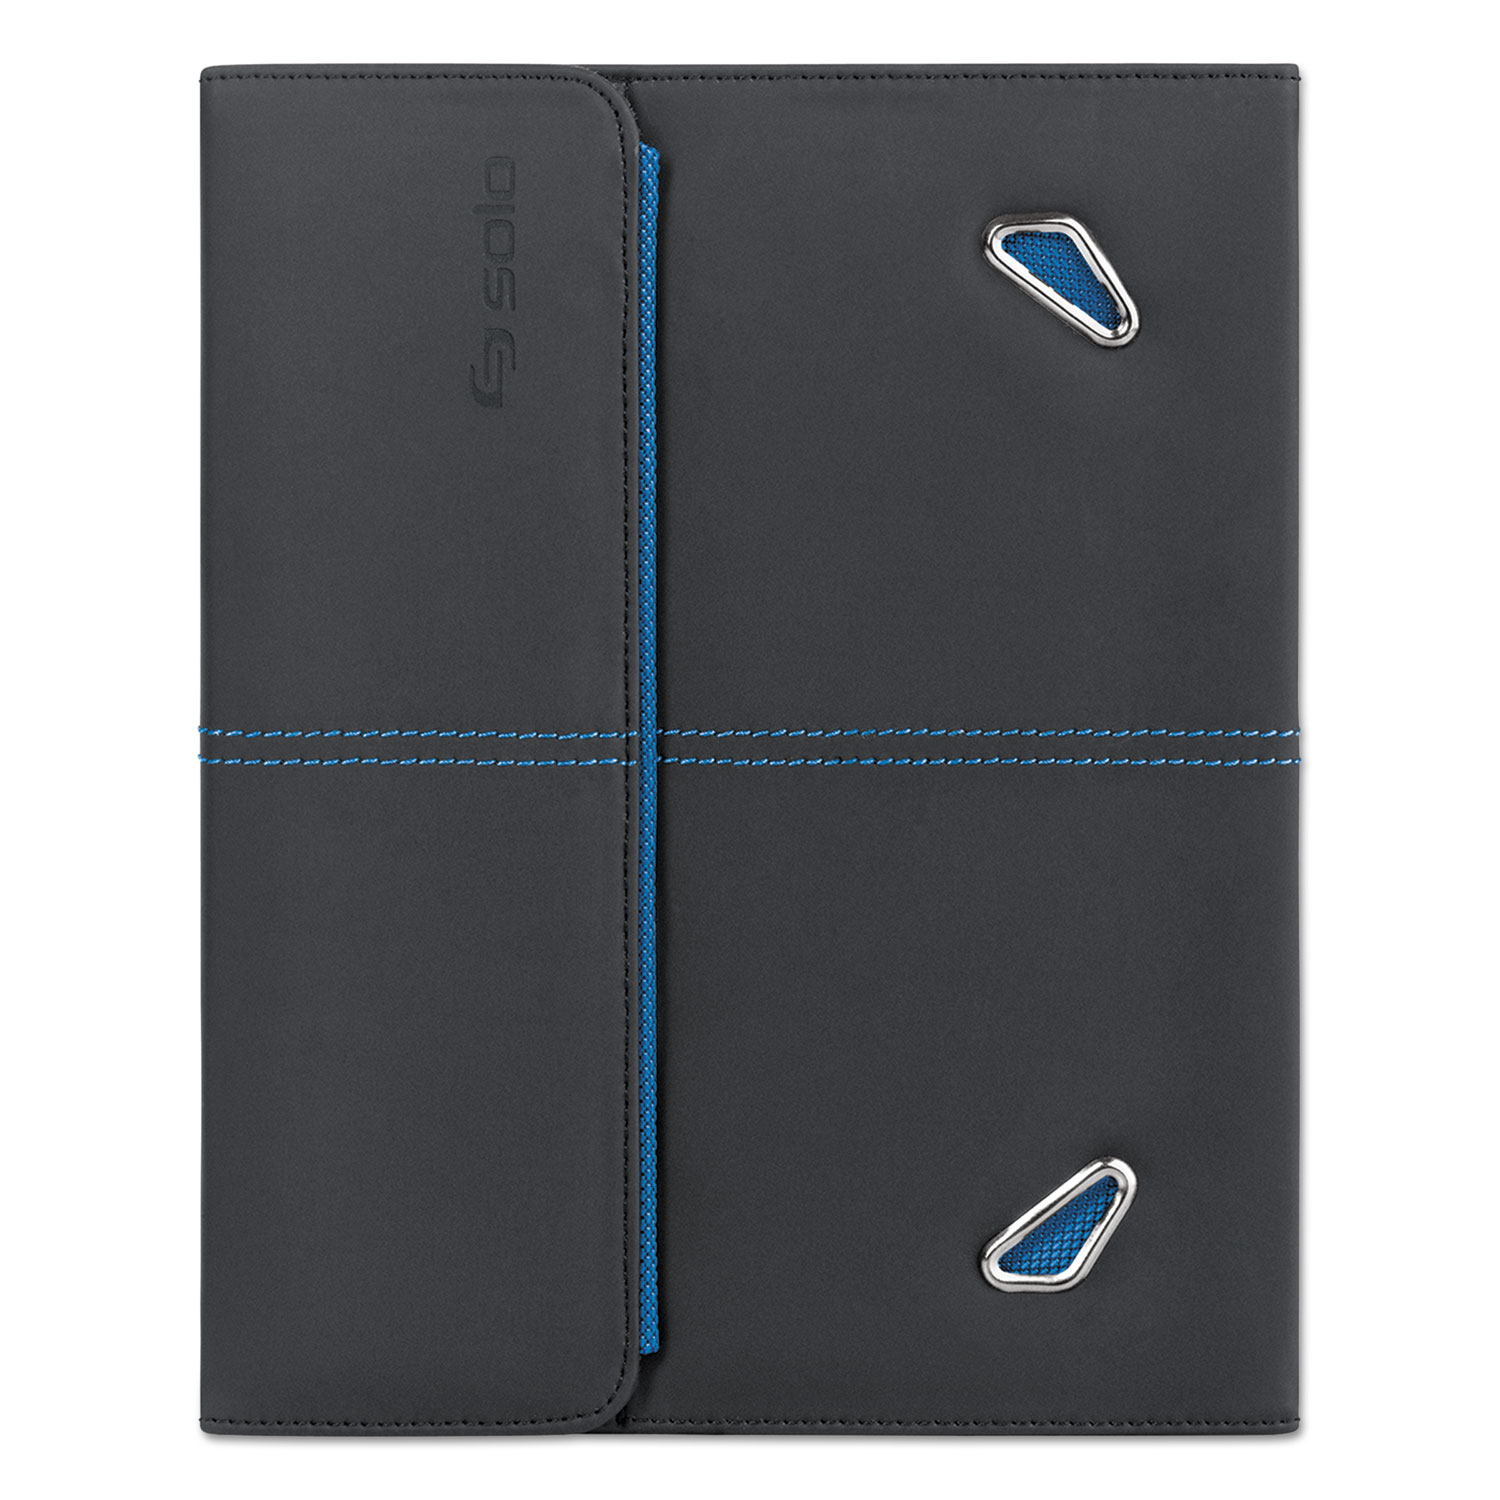 Active Tablet Case for iPad, iPad 2/3rd Gen/4th Gen, Black/Blue